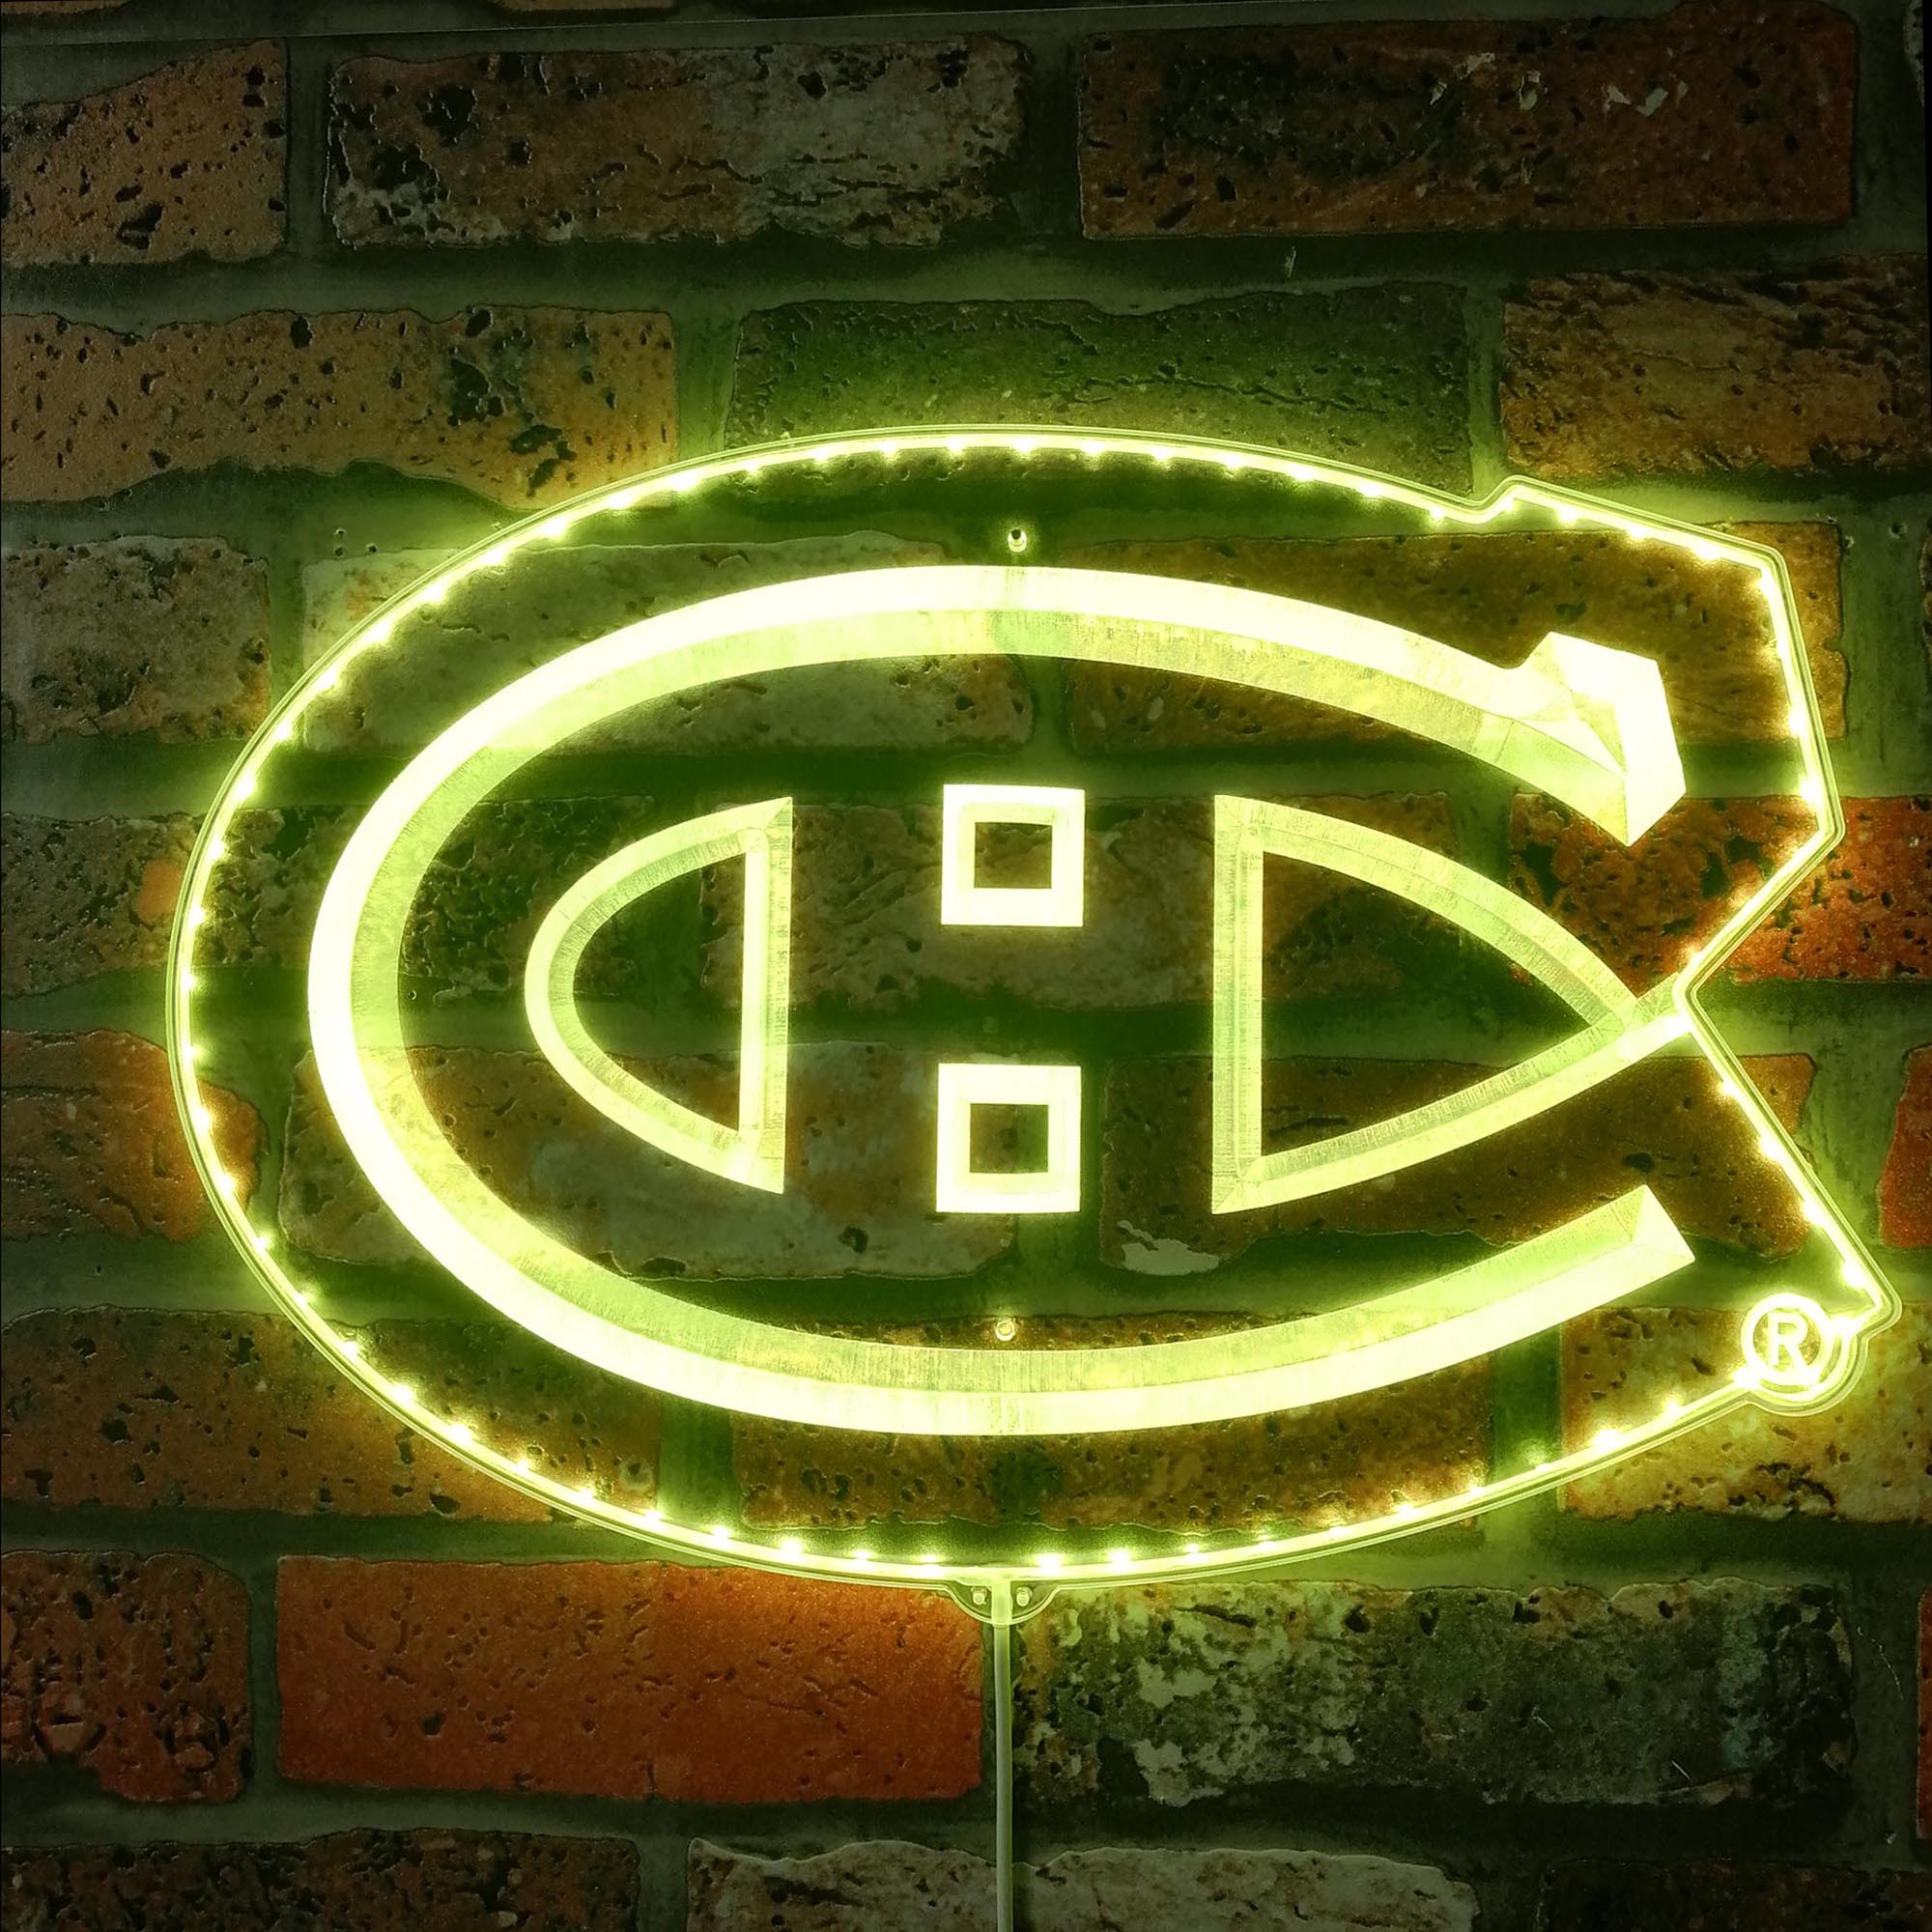 Montreal Canadiens Dynamic RGB Edge Lit LED Sign